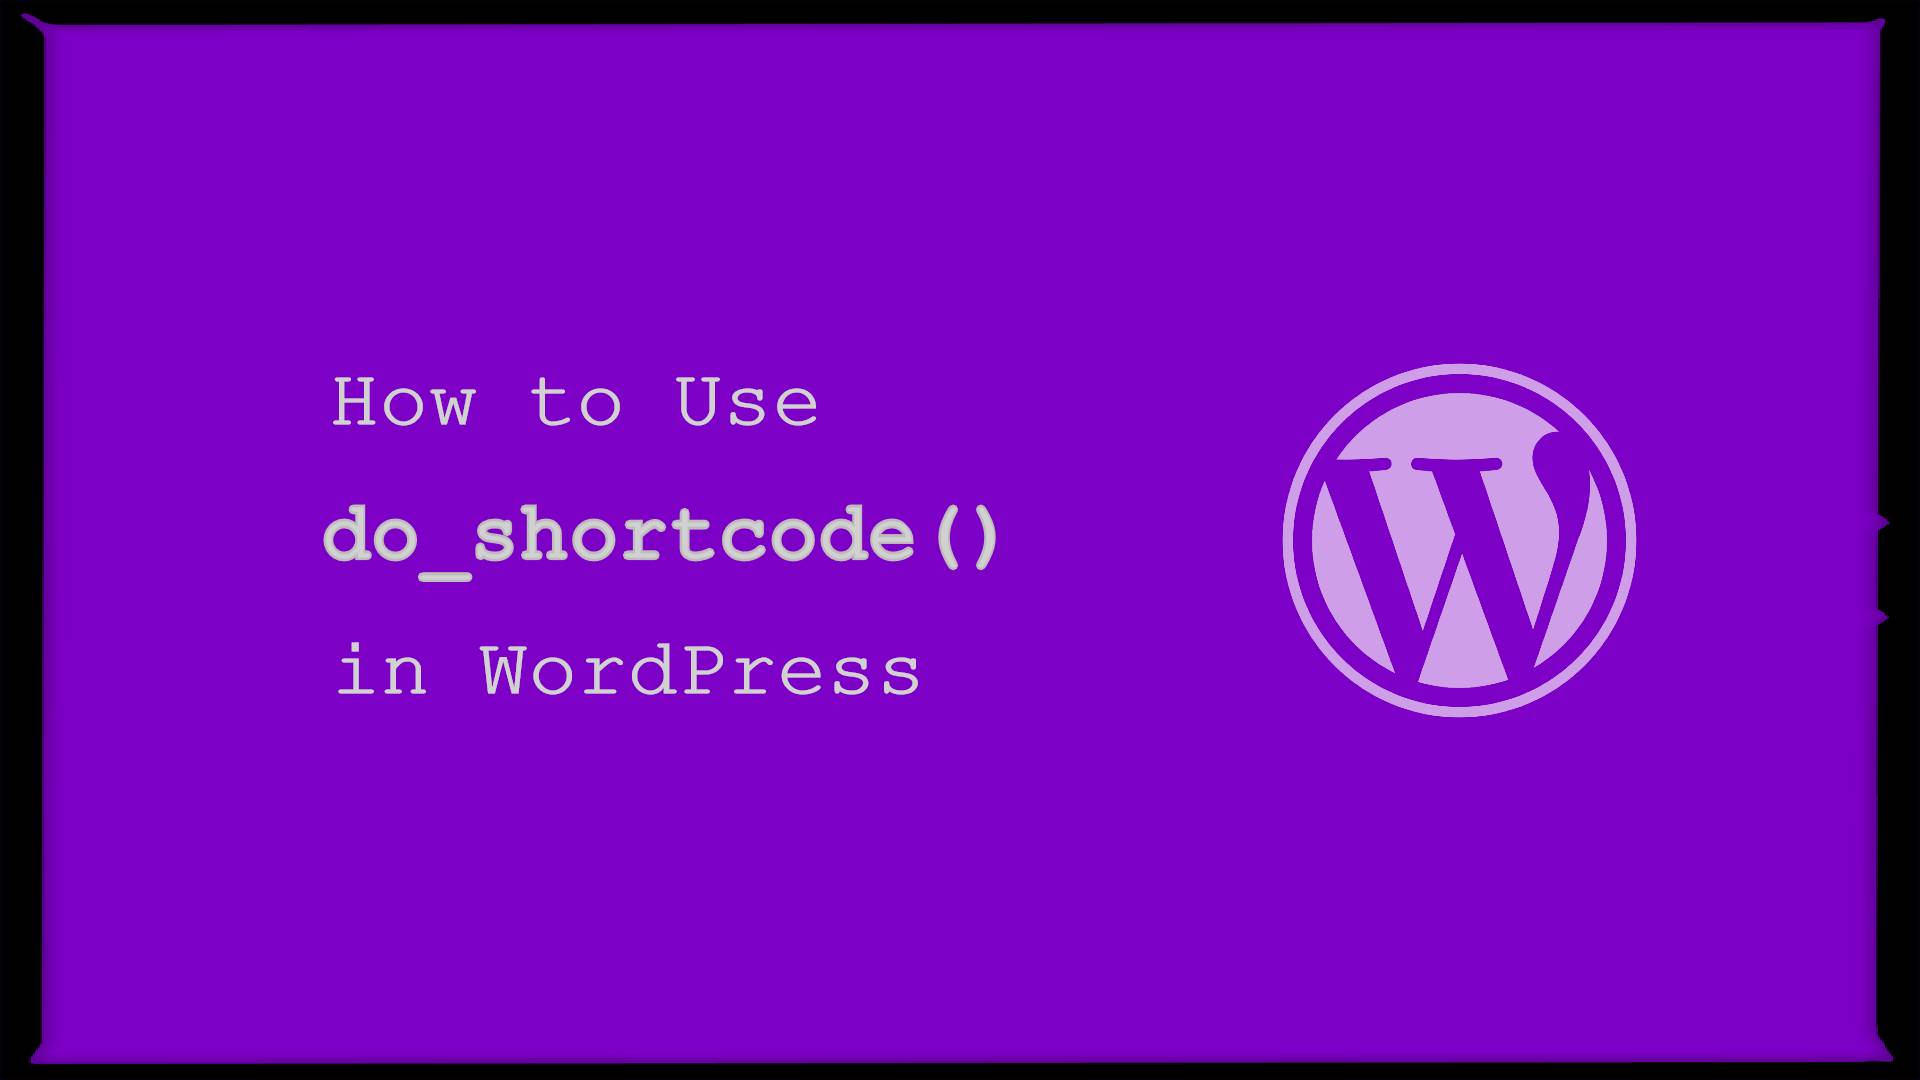 do_shortcode in WordPress